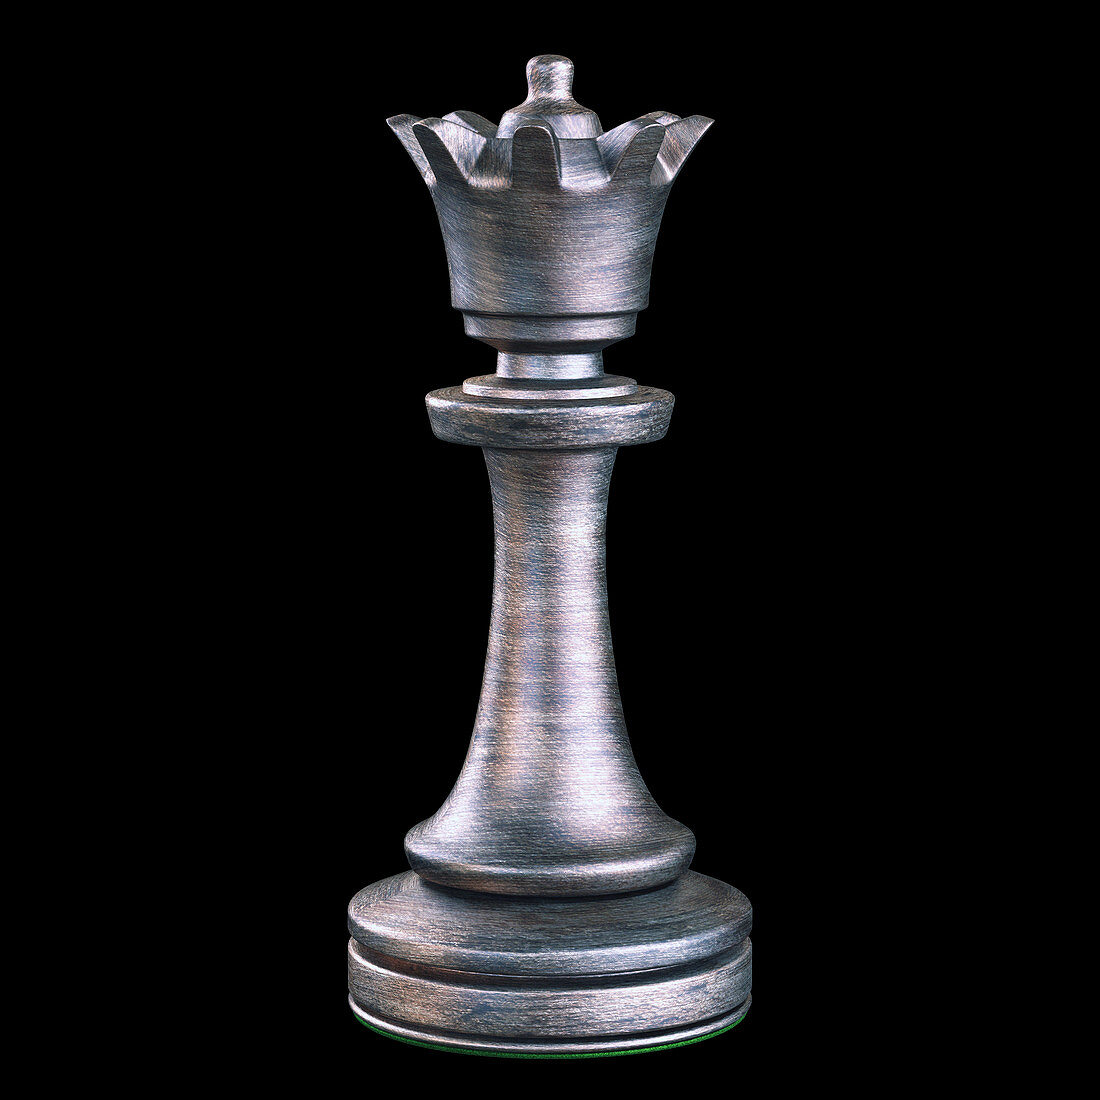 Queen chess piece,illustration